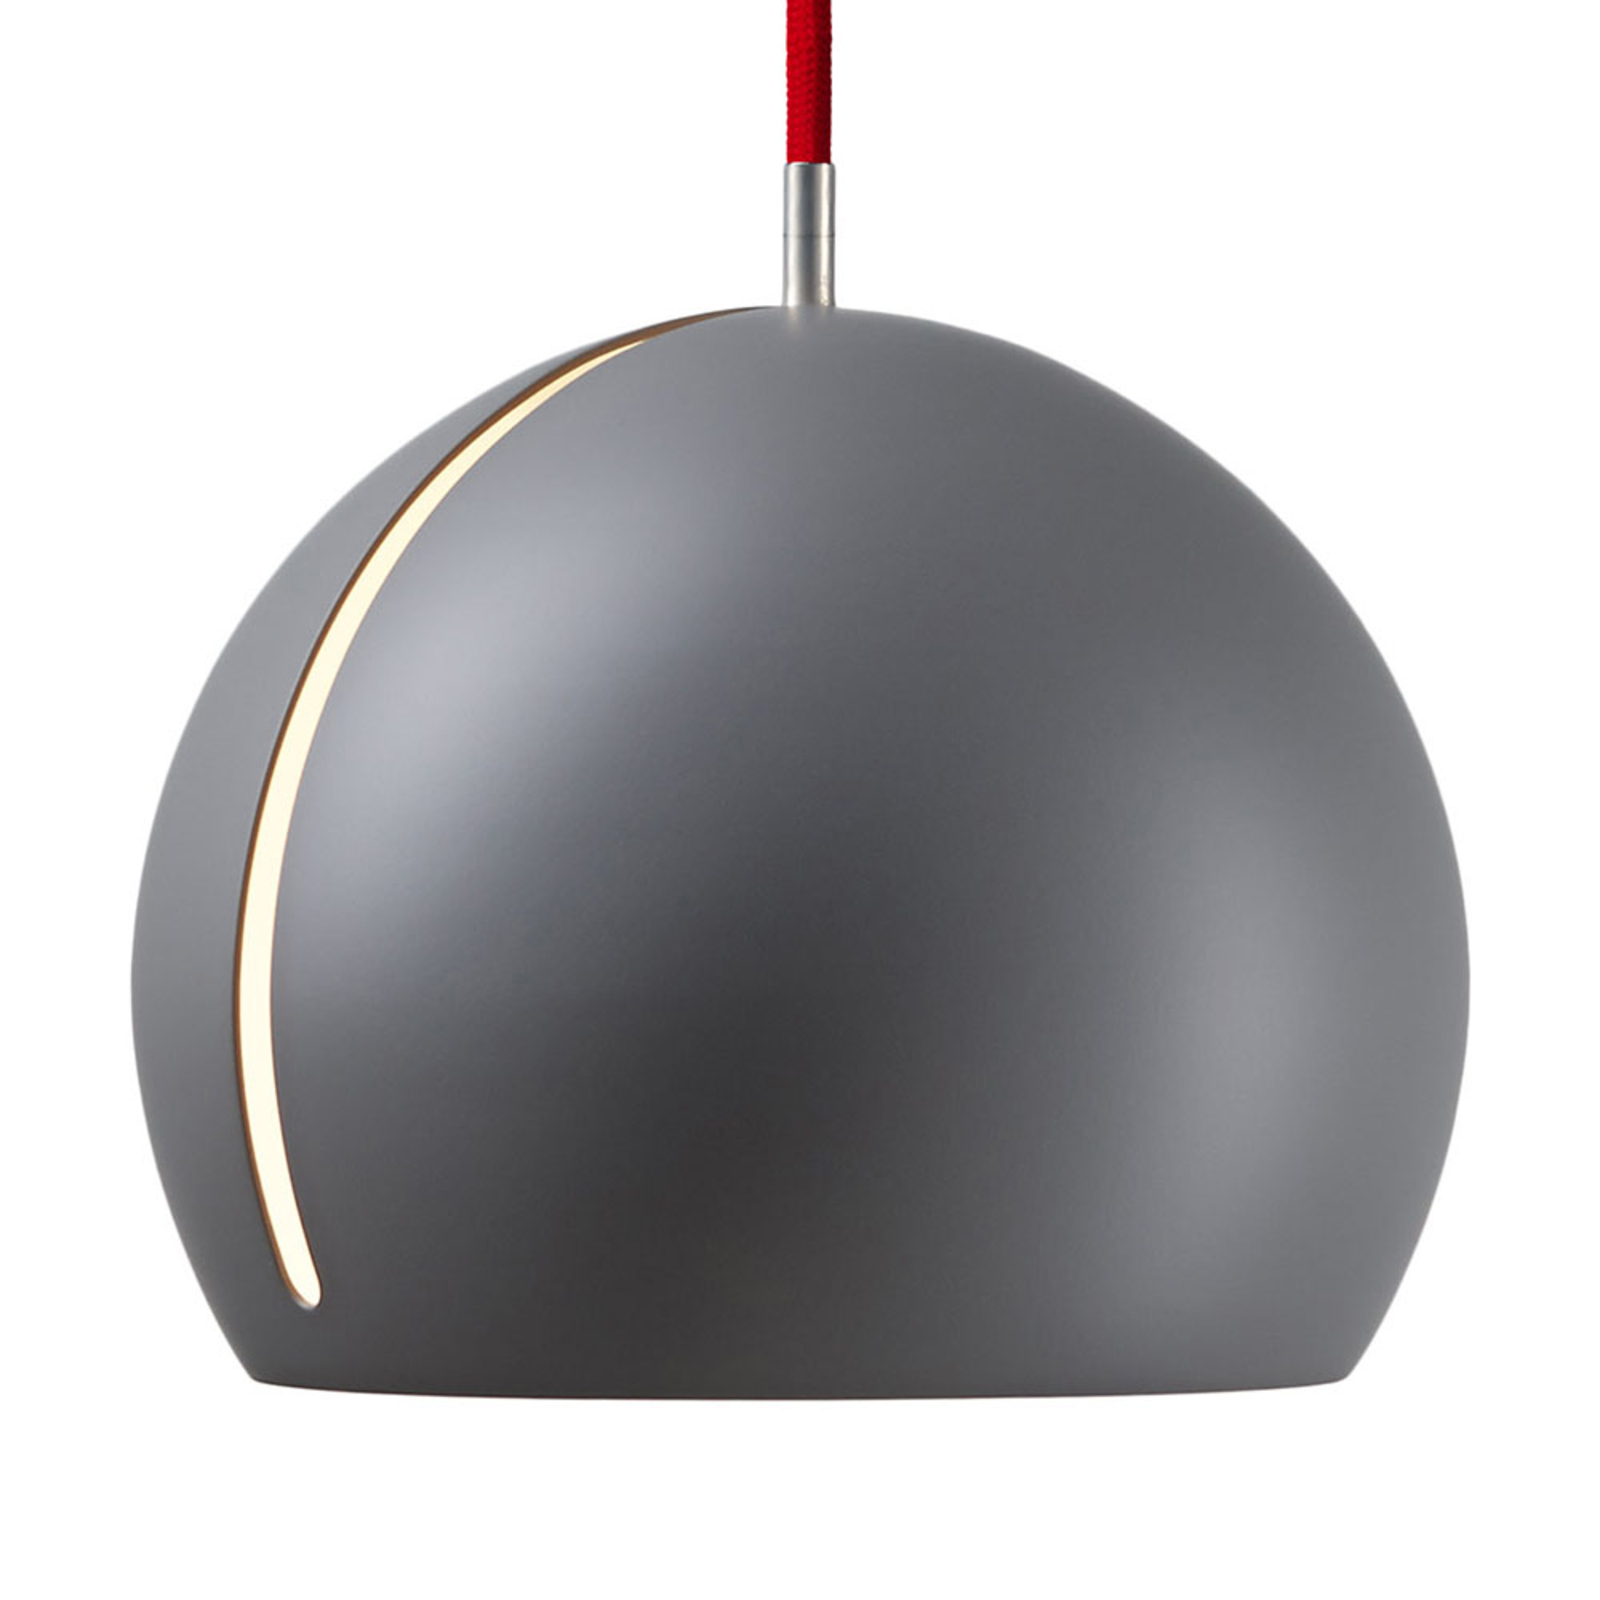 Nyta Tilt Globe hanging light, red 3m cable, grey